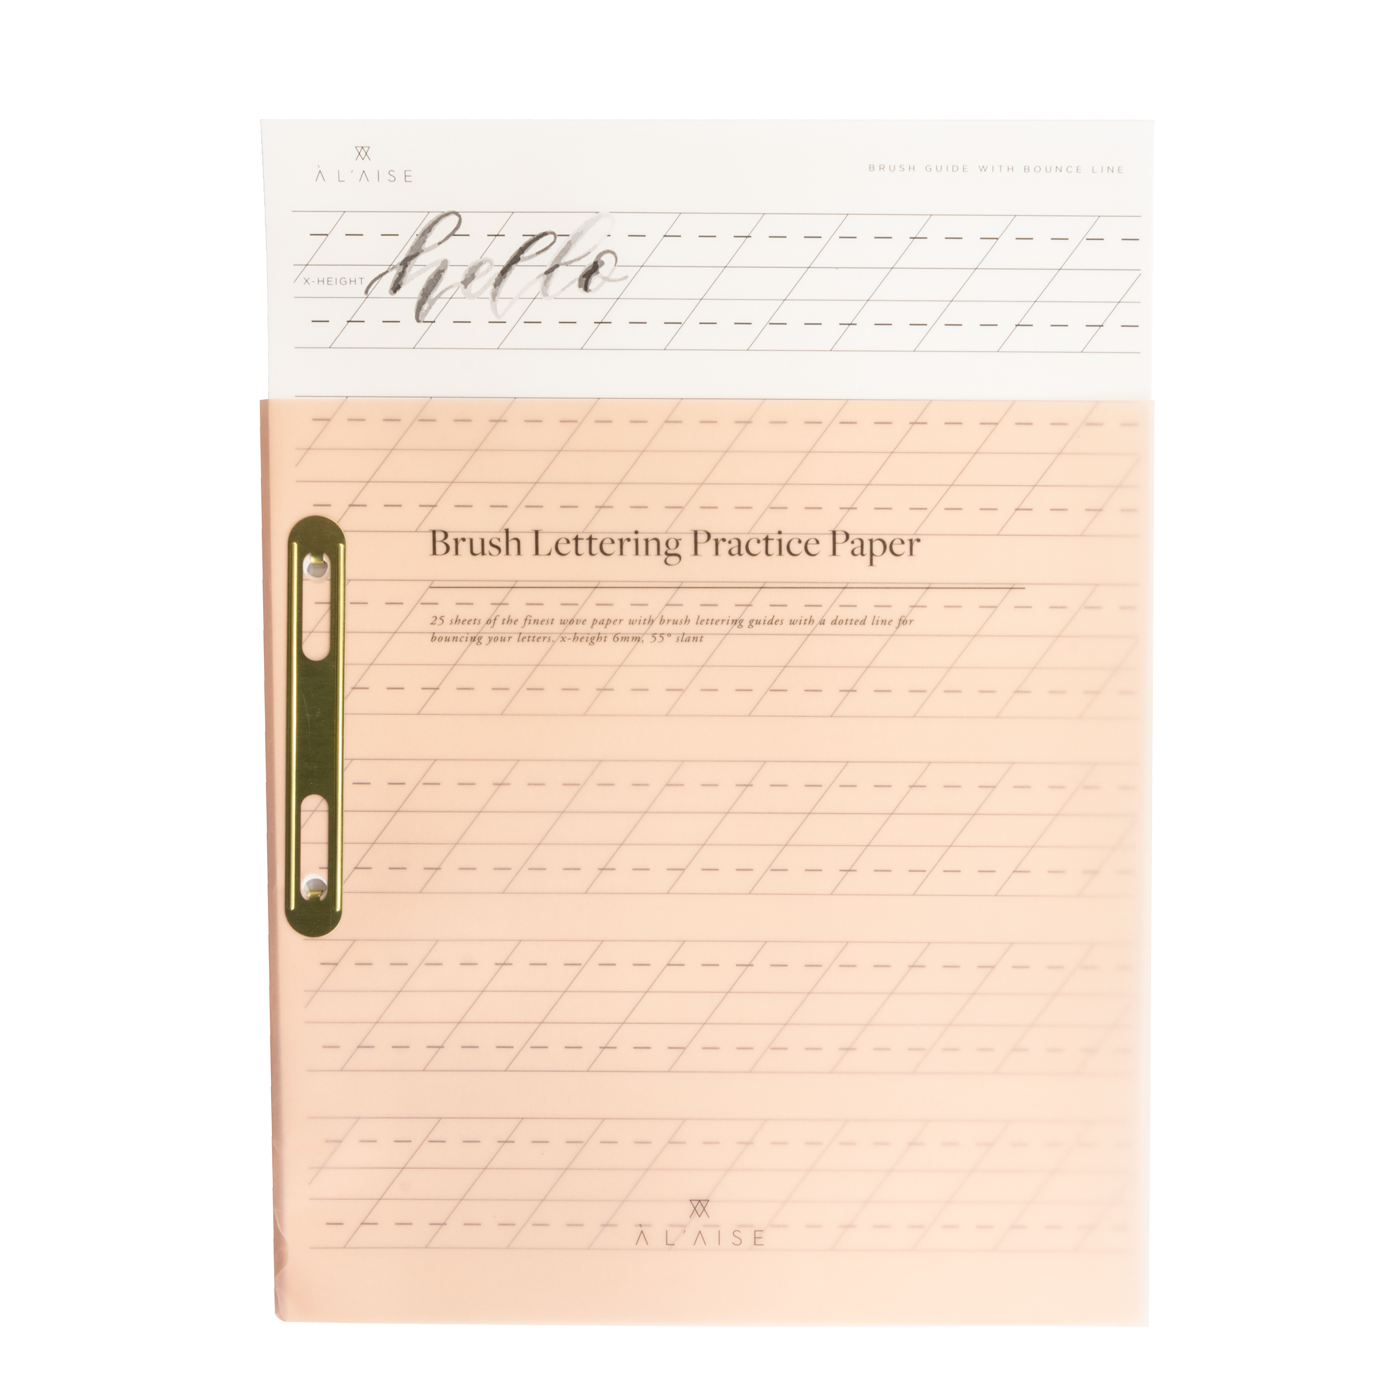 A L'AISE - Brush Lettering Practice Paper